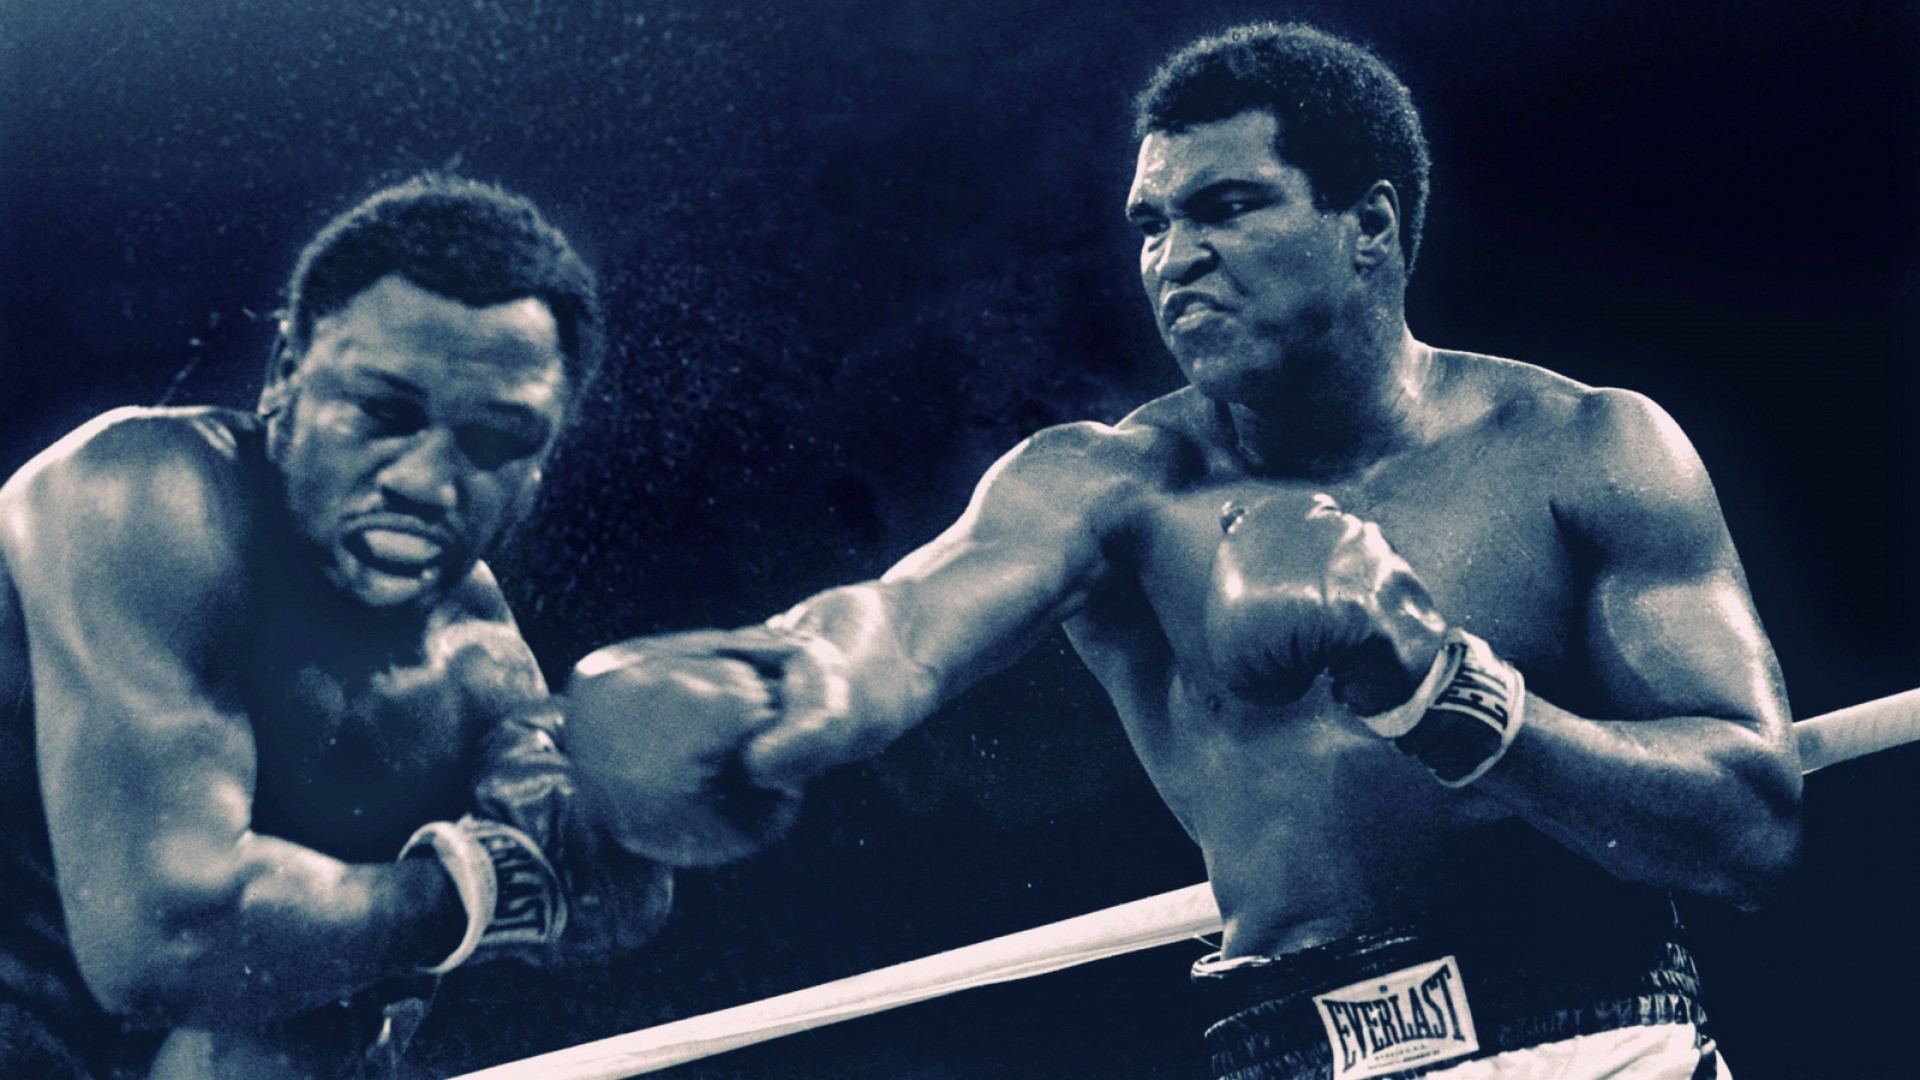 People 1920x1080 monochrome Muhammad Ali boxing men sport athletes shirtless black men